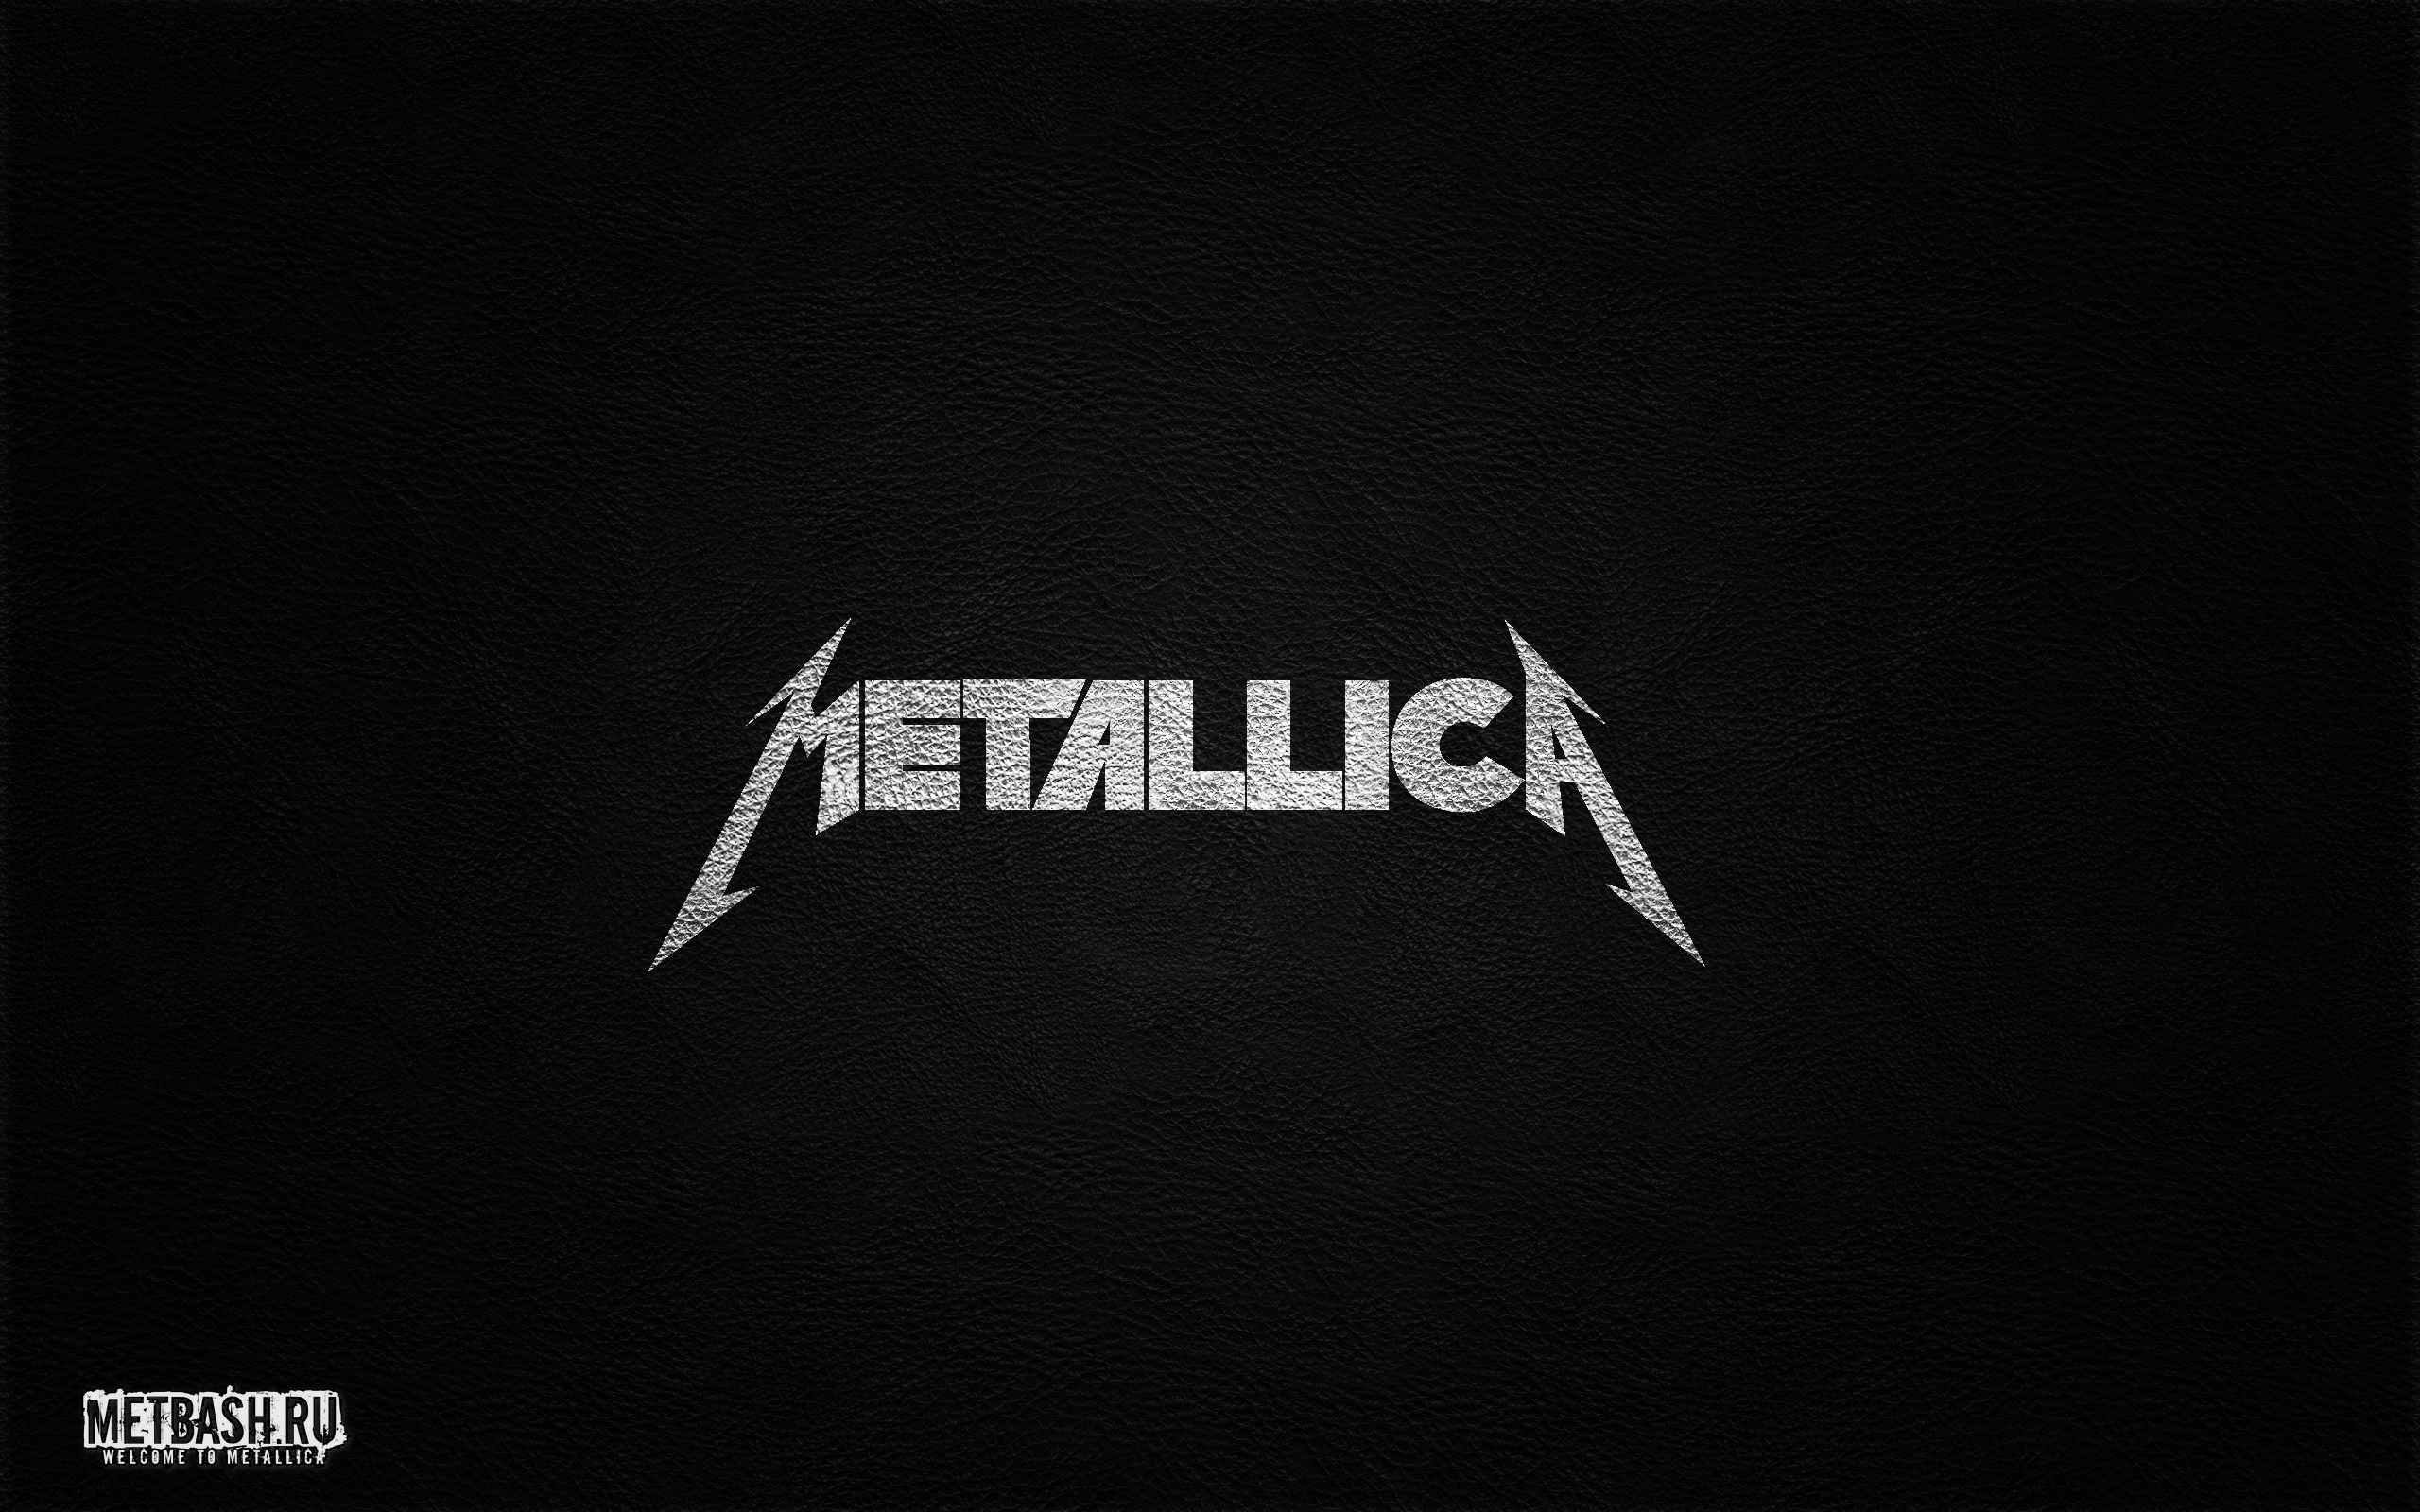 Metallica Wallpaper Best Cars Res